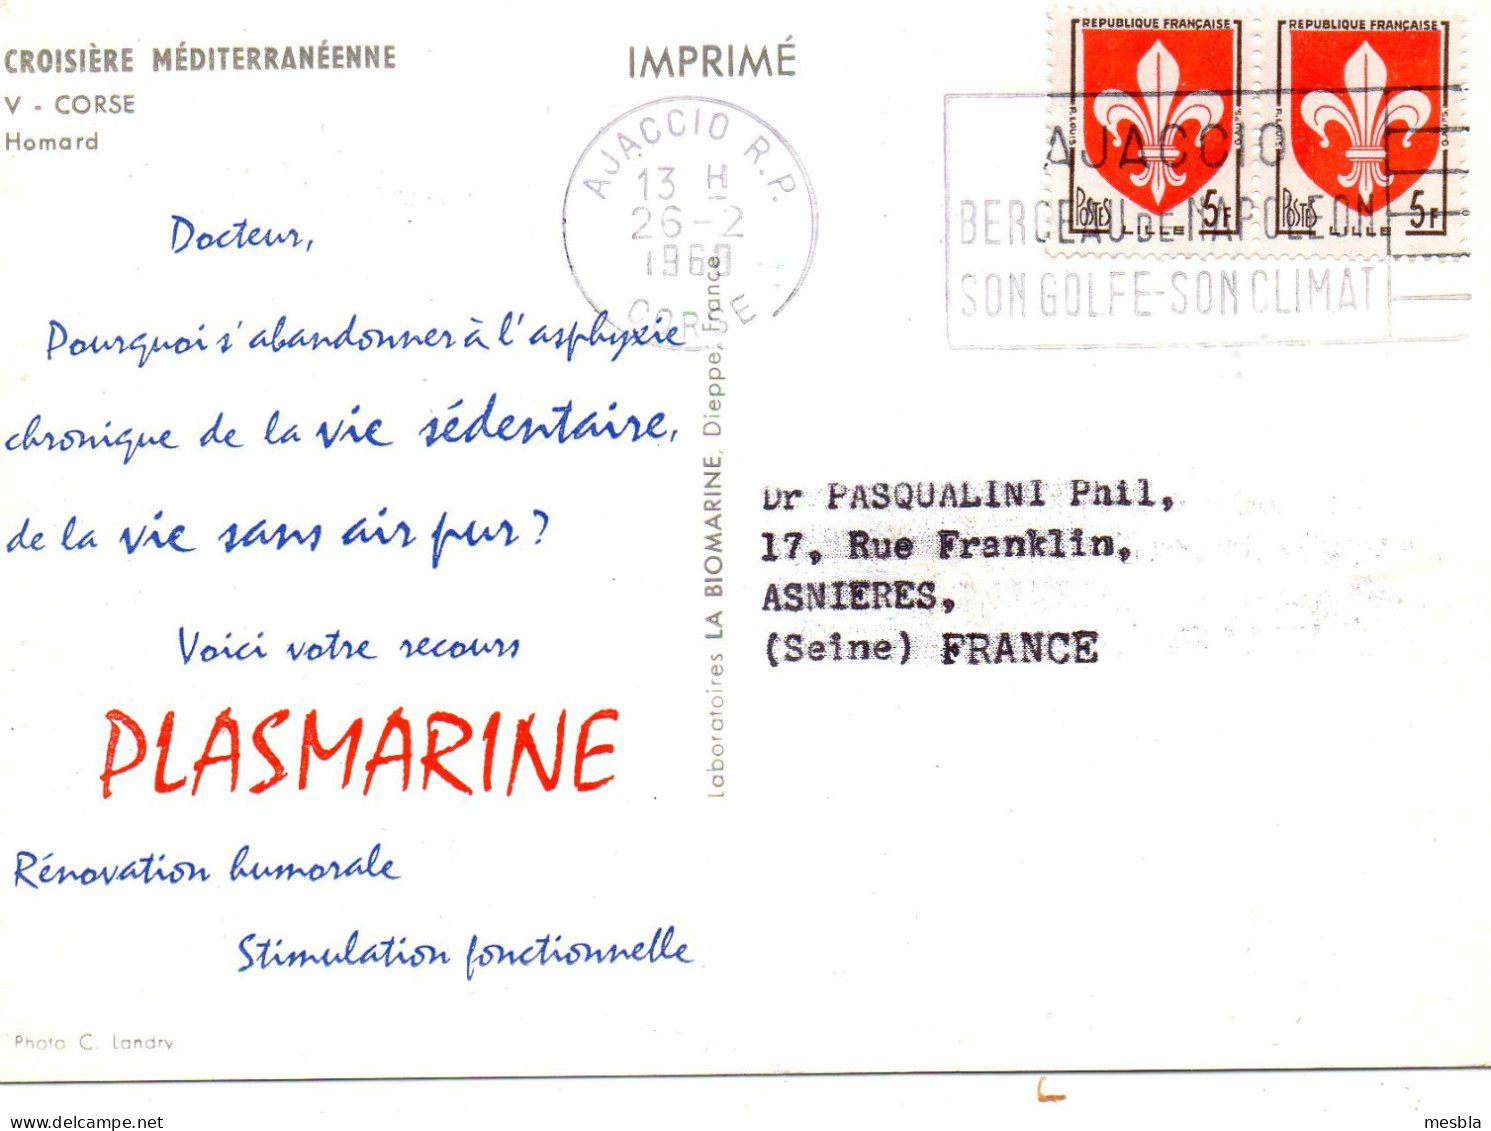 CORSE -  HOMARD - Publicité Pharmaceutique PLASMARINE - Docteur PASQUALINI -  ASNIERES - 1960 - Fish & Shellfish